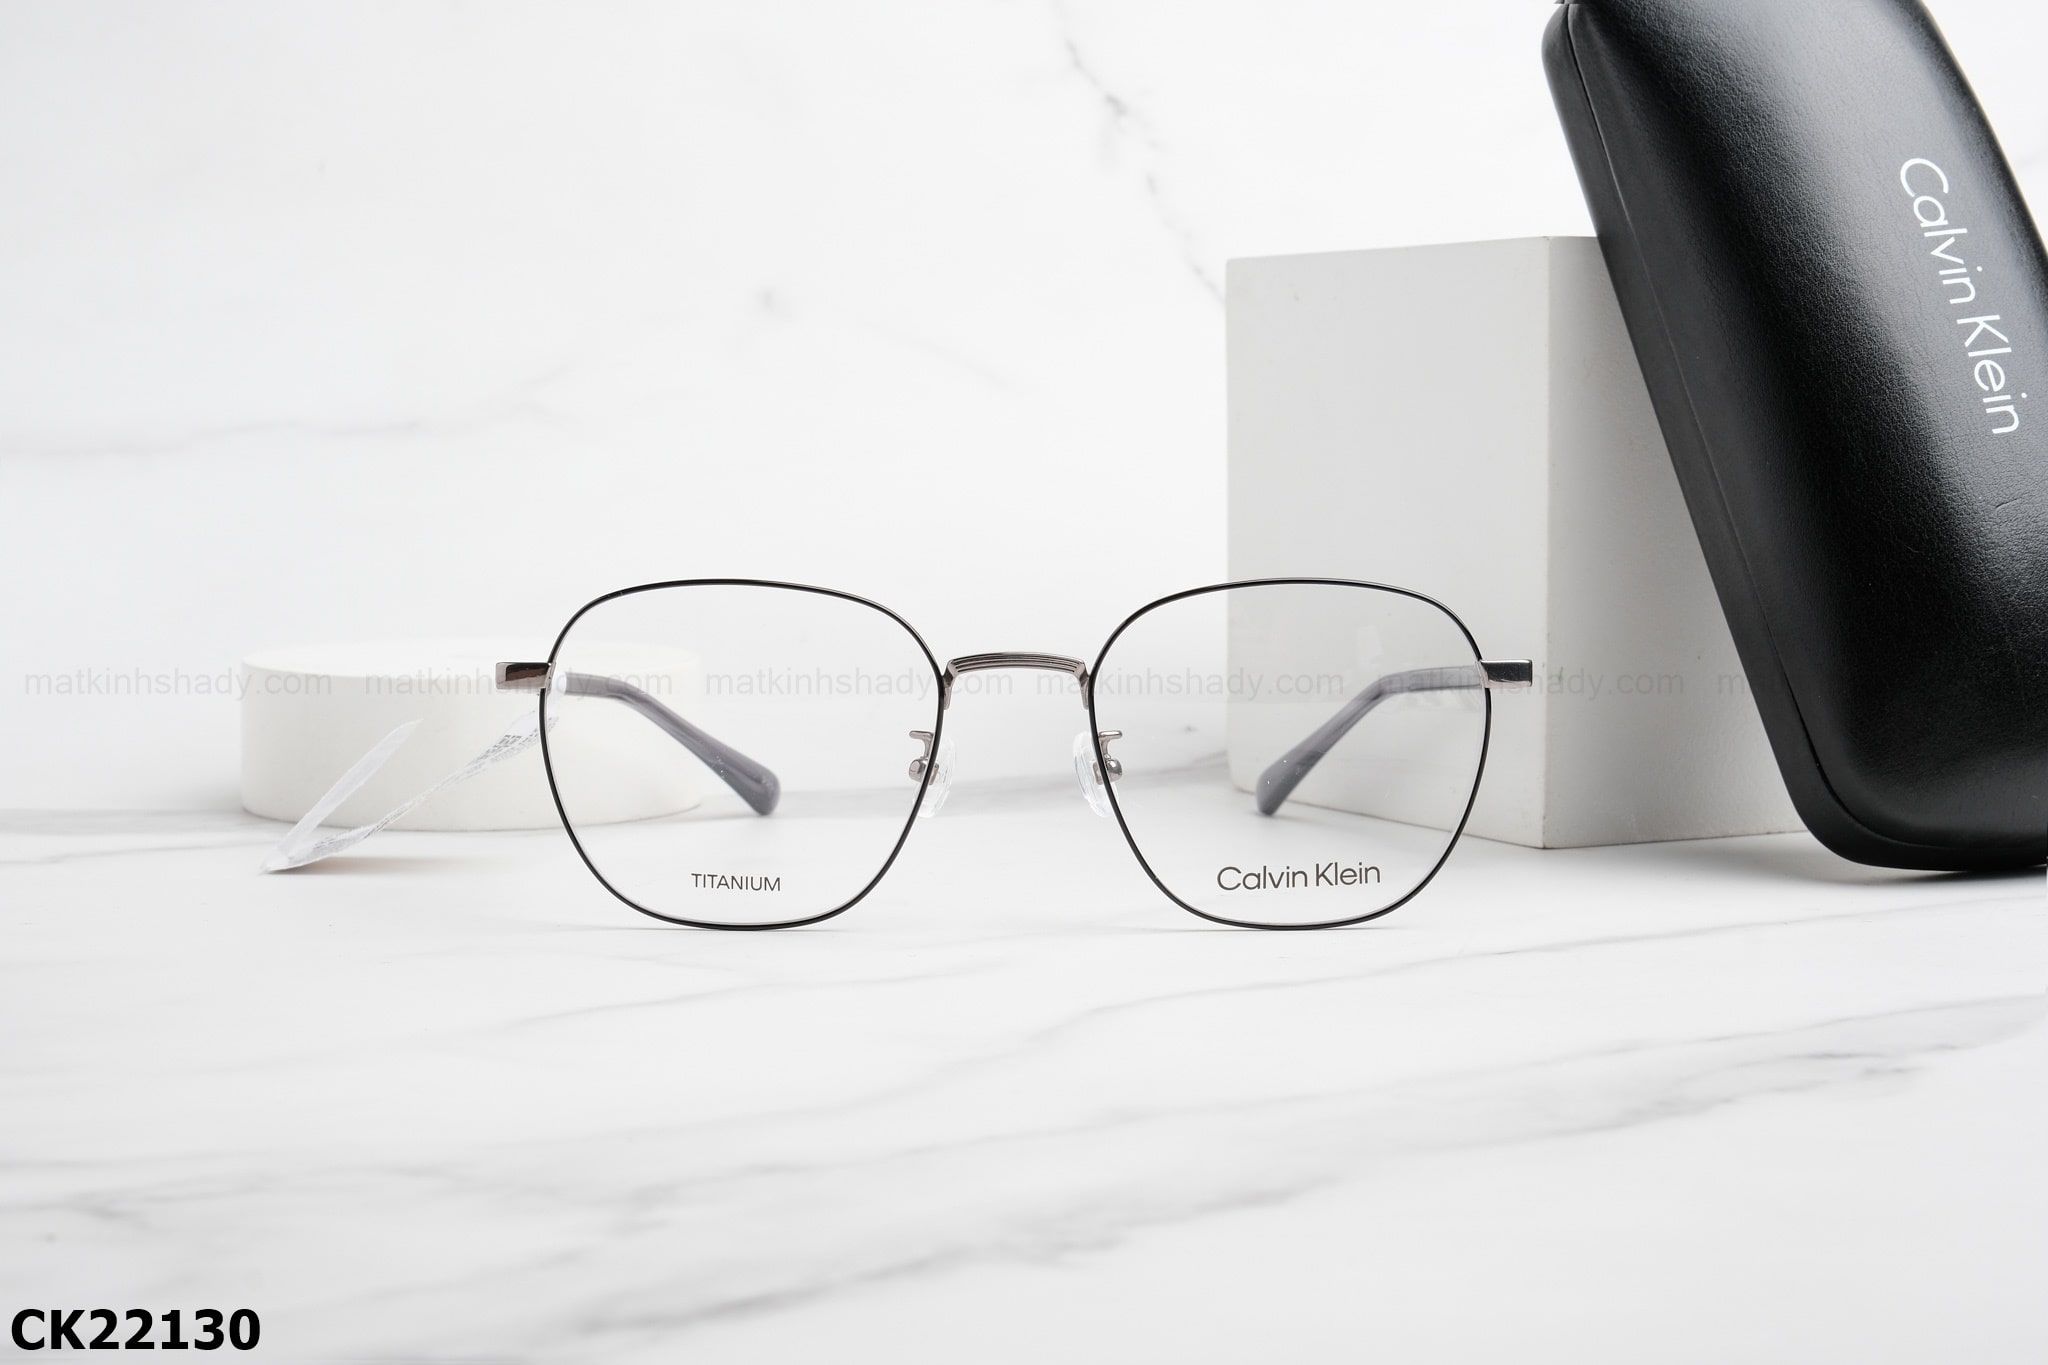  Calvin Klein Eyewear - Glasses - CK22130 